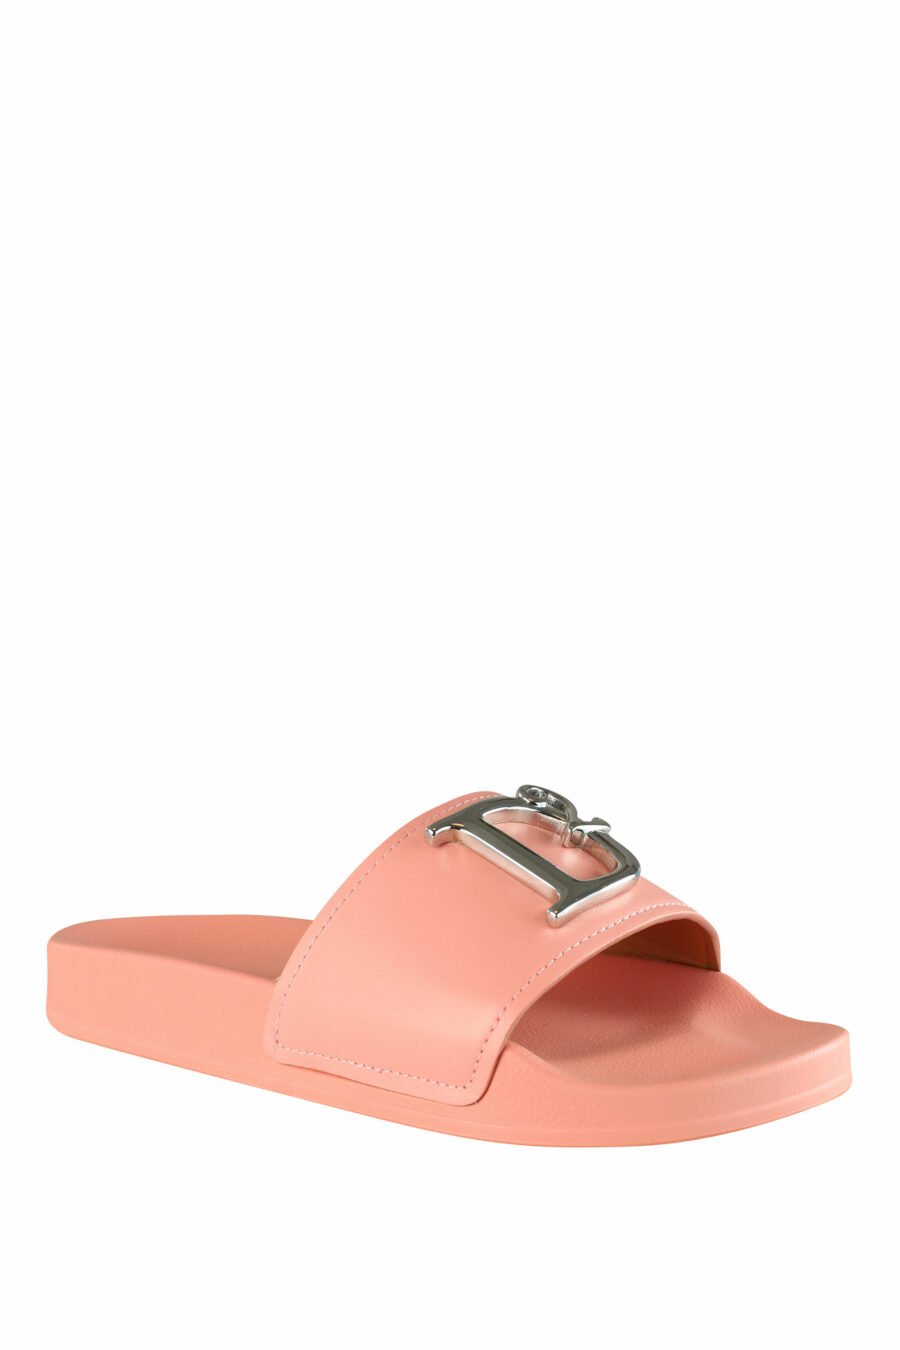 Pink flip flops with metal "D2" logo - IMG 1303